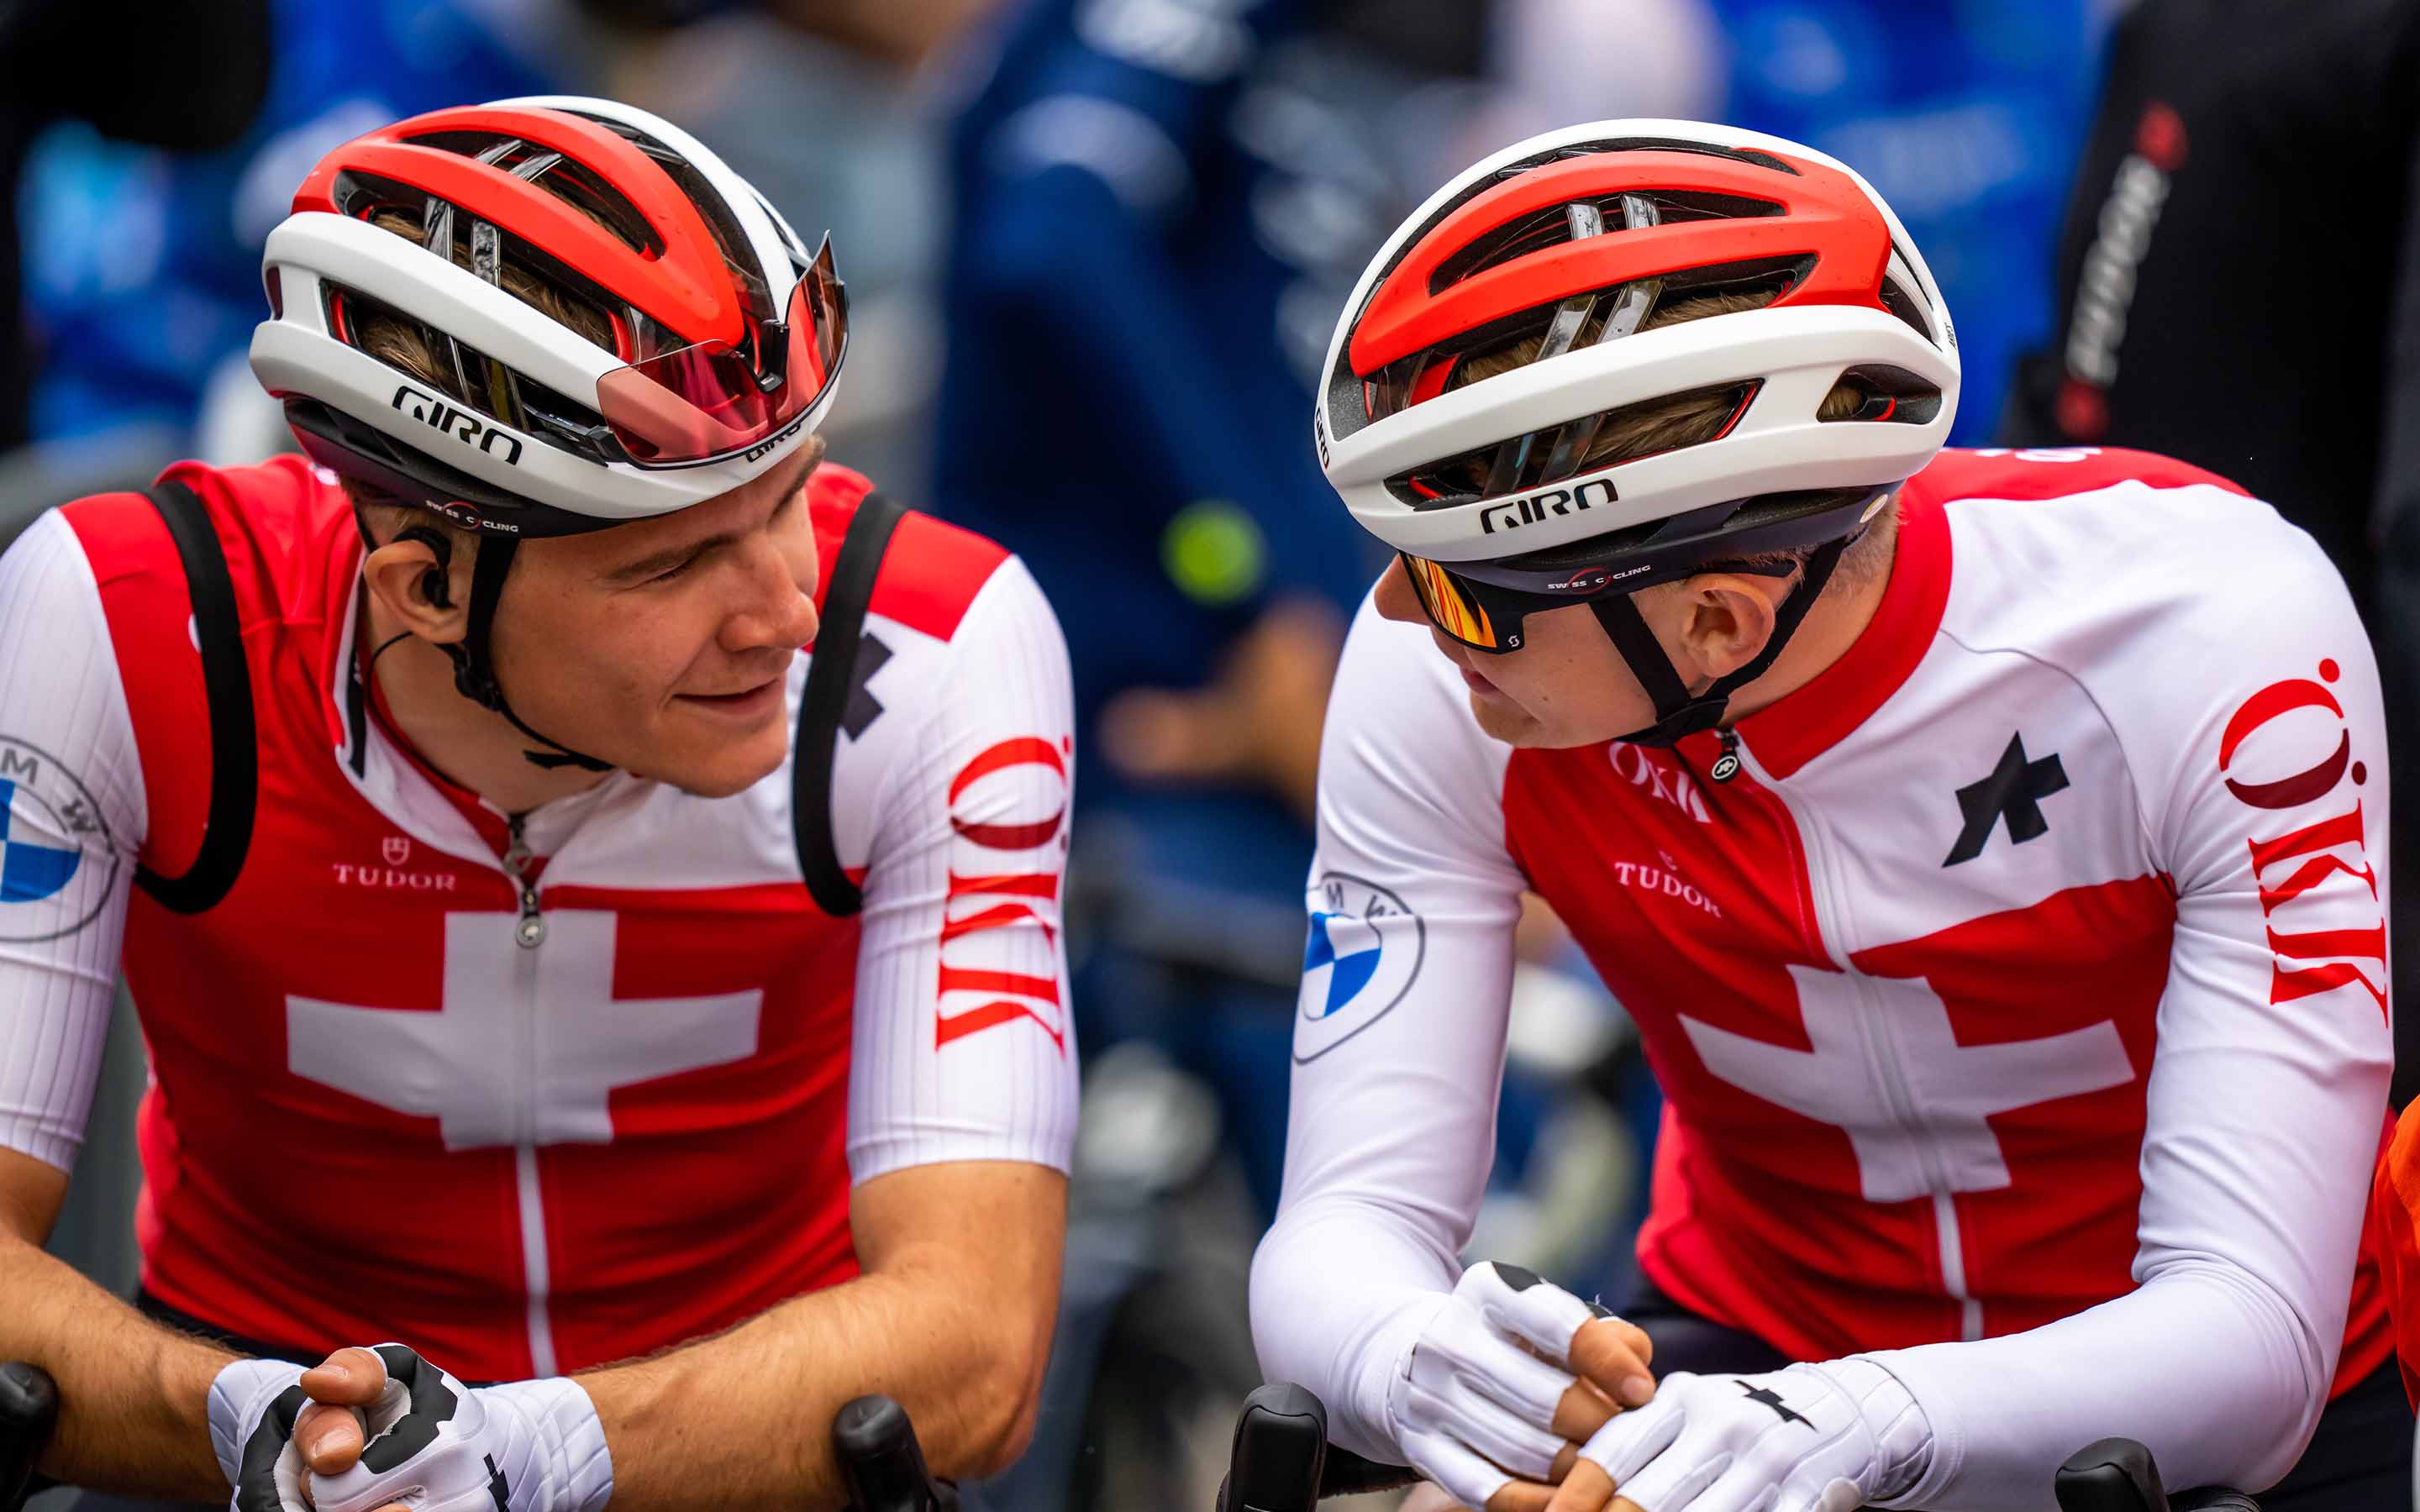 zwei Radfahrer des Swiss Cycling Teams